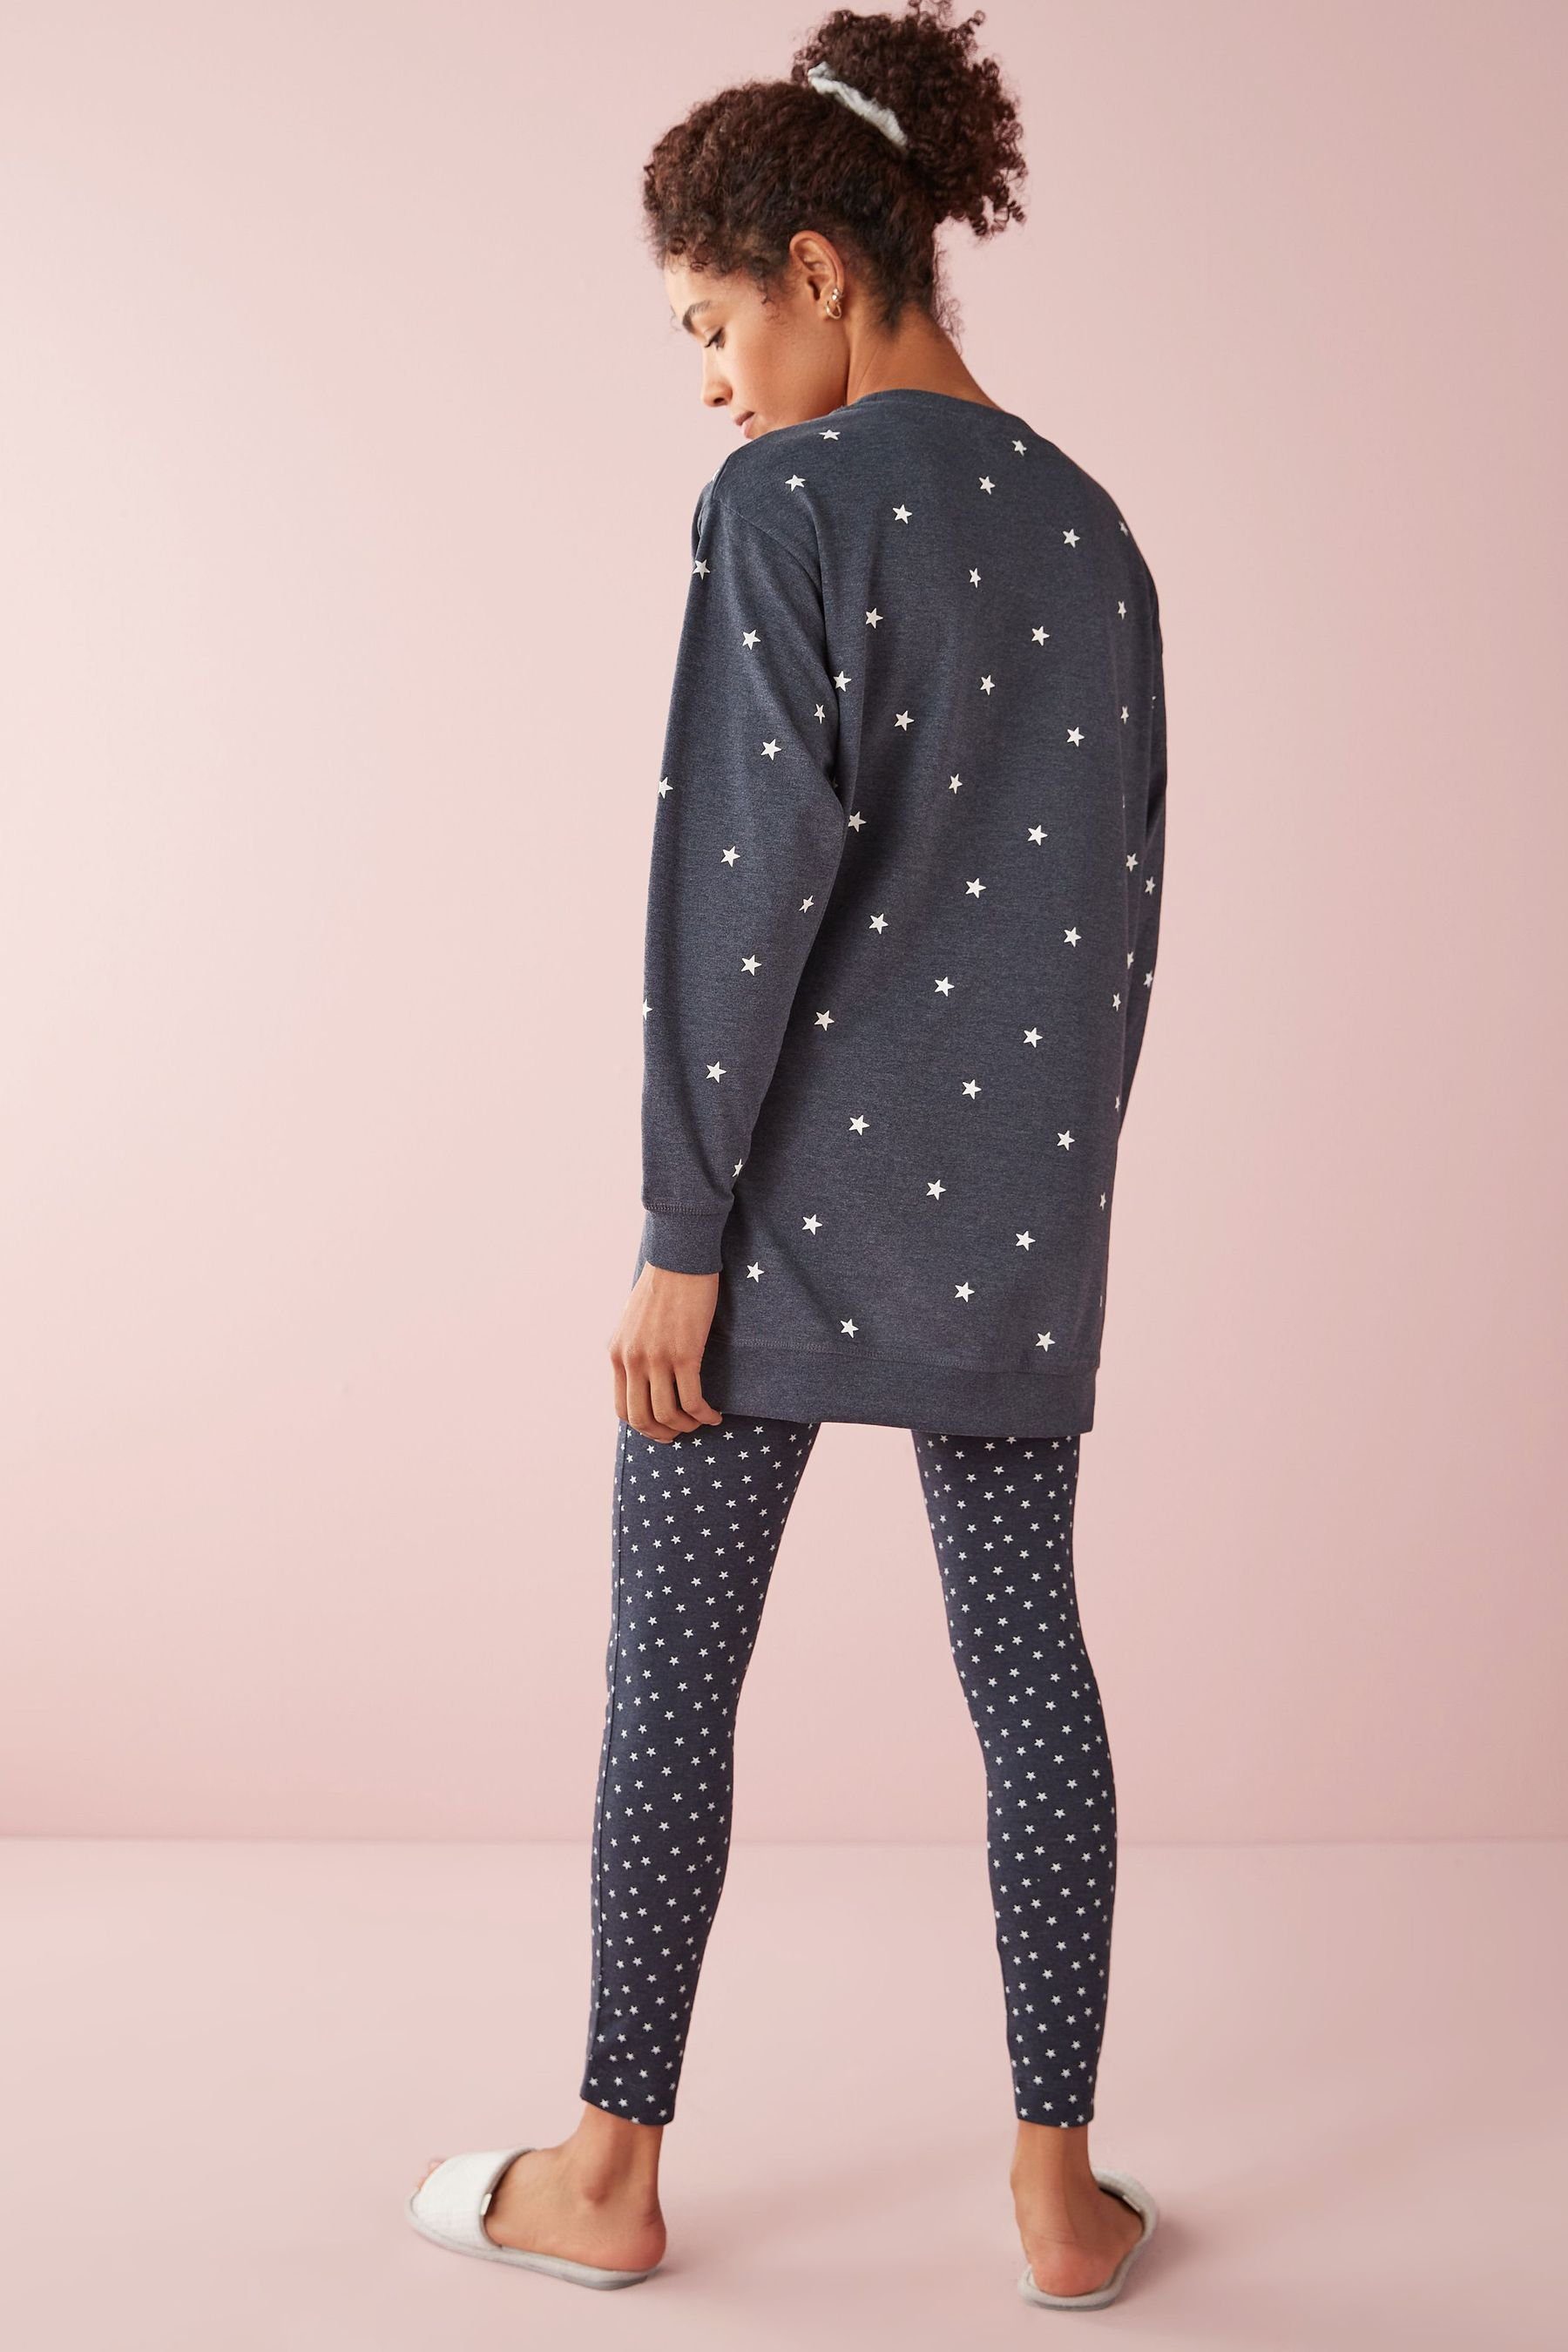 und tlg) Baumwollschlafanzug Tunika Leggings Pyjama Next mit (2